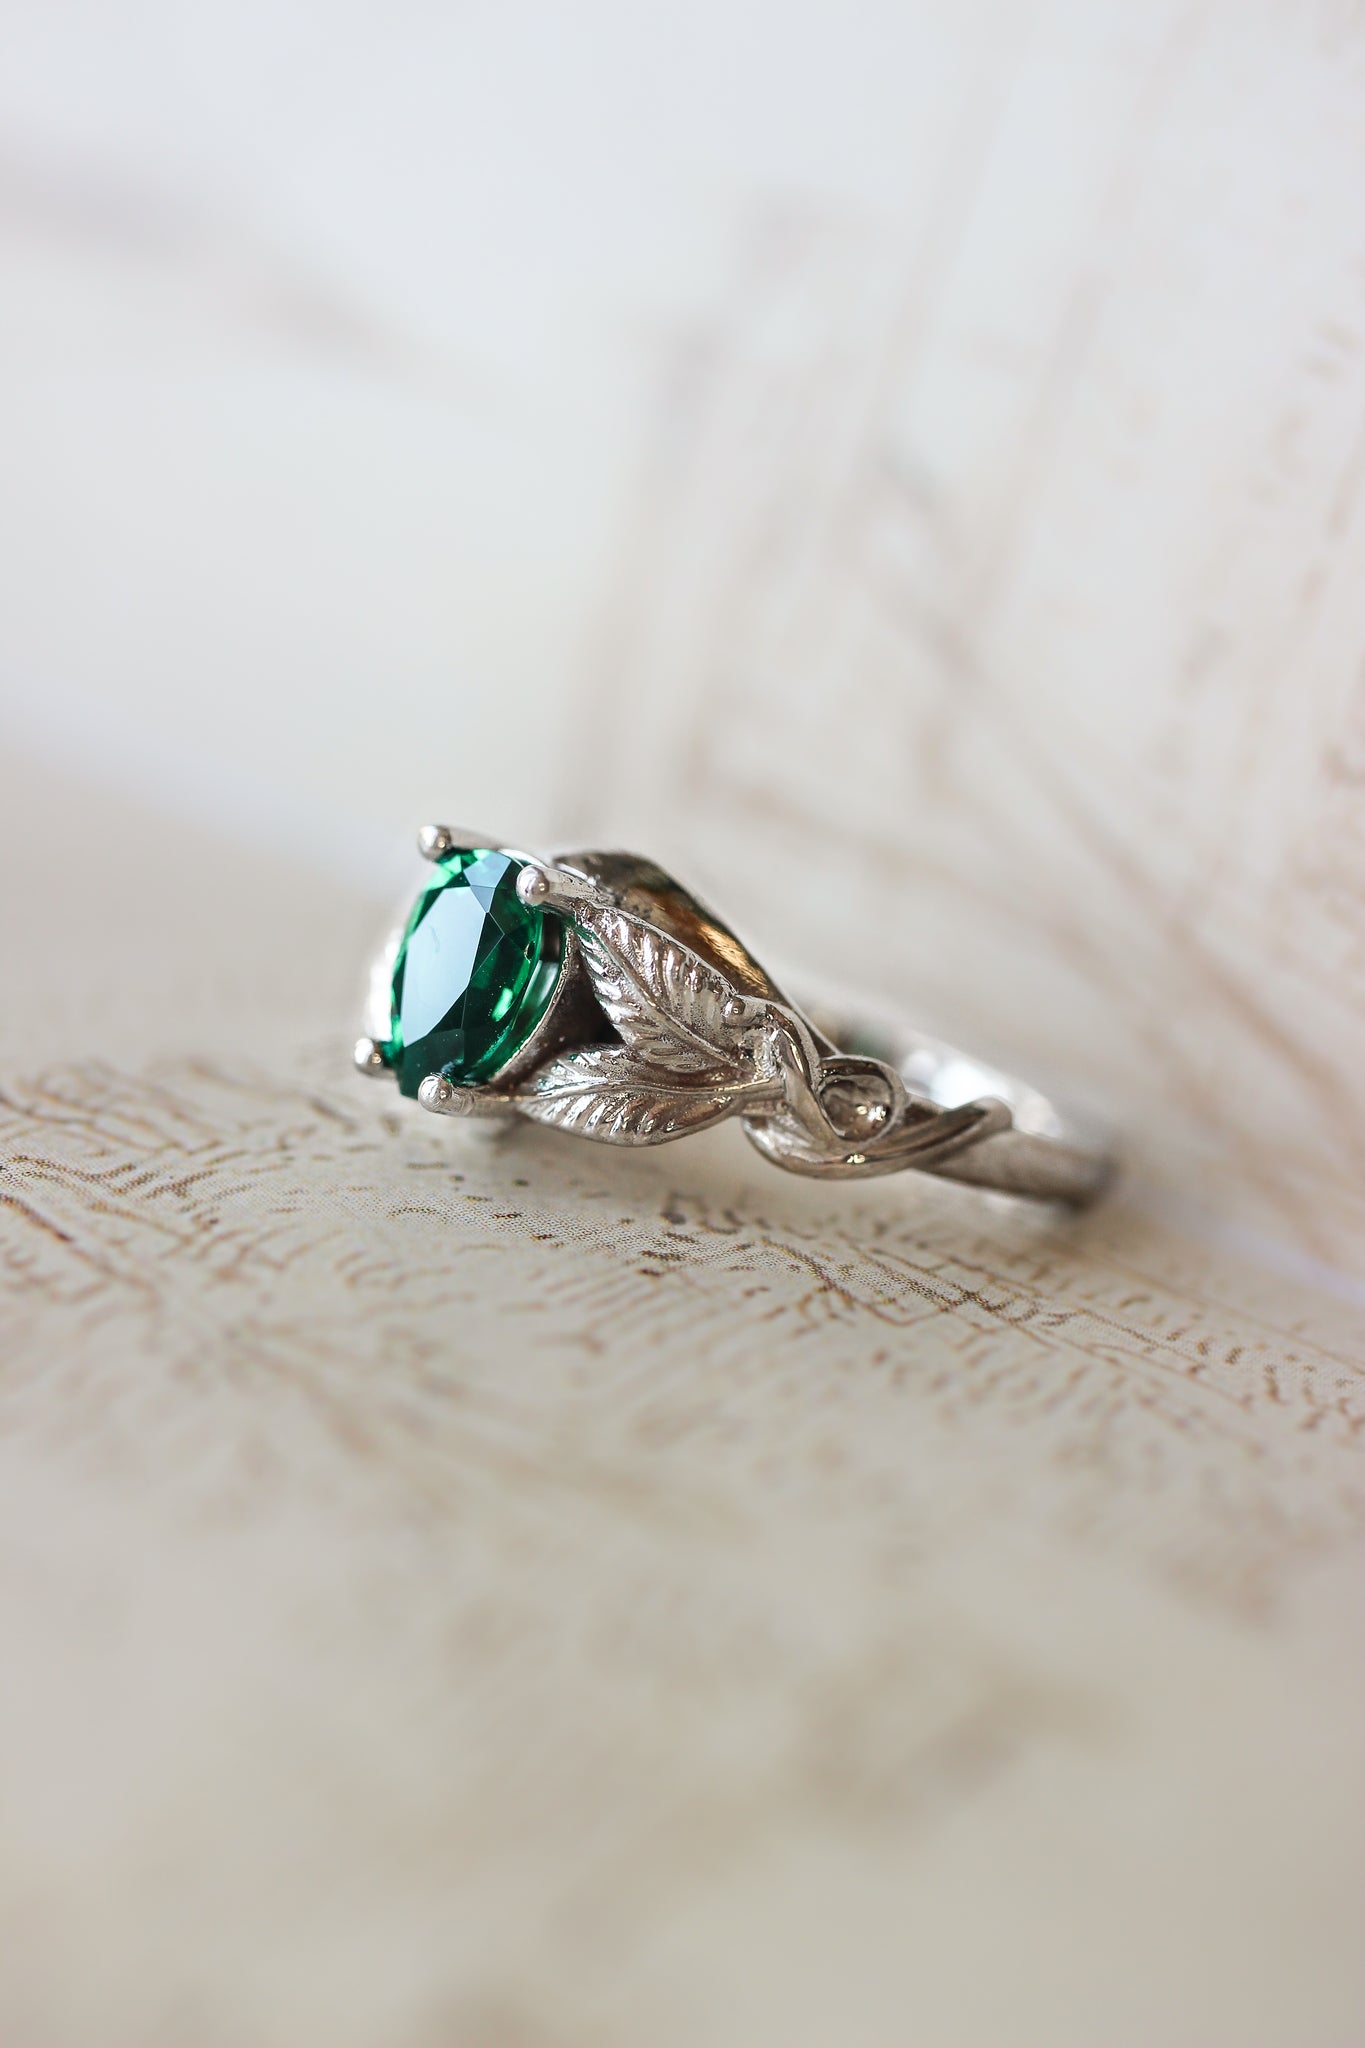 Pear cut lab emerald engagement ring / Azalea - Eden Garden Jewelry™